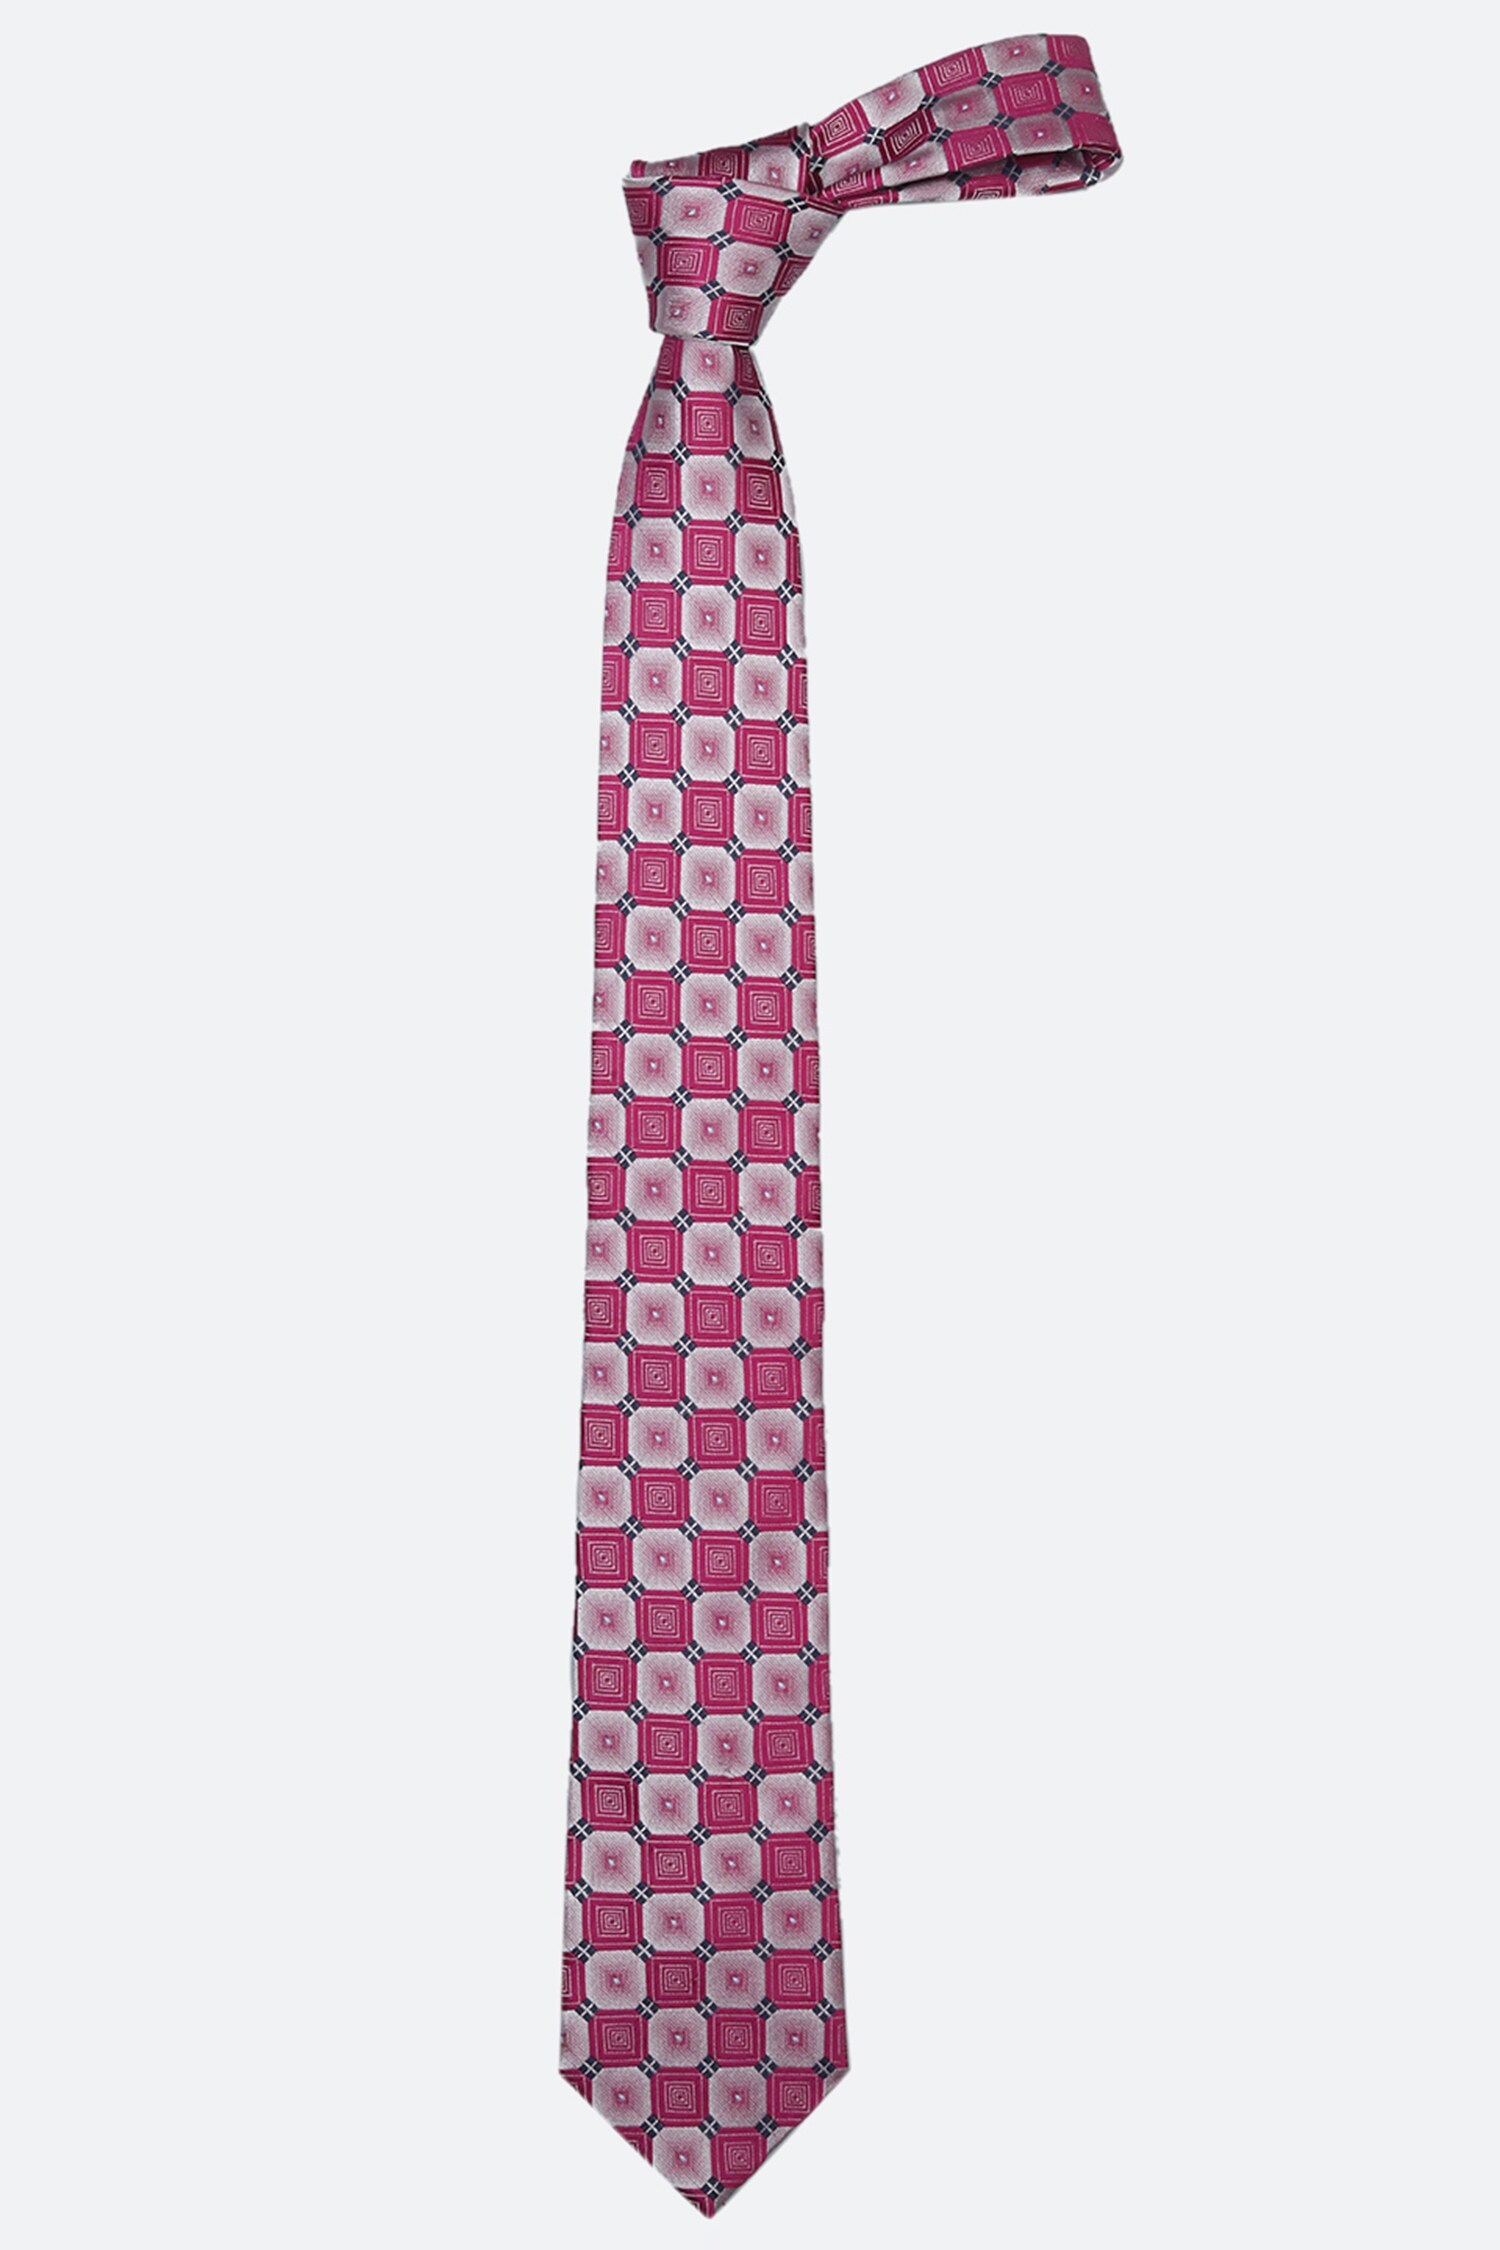 Tossido Pink Print Geometric Tie